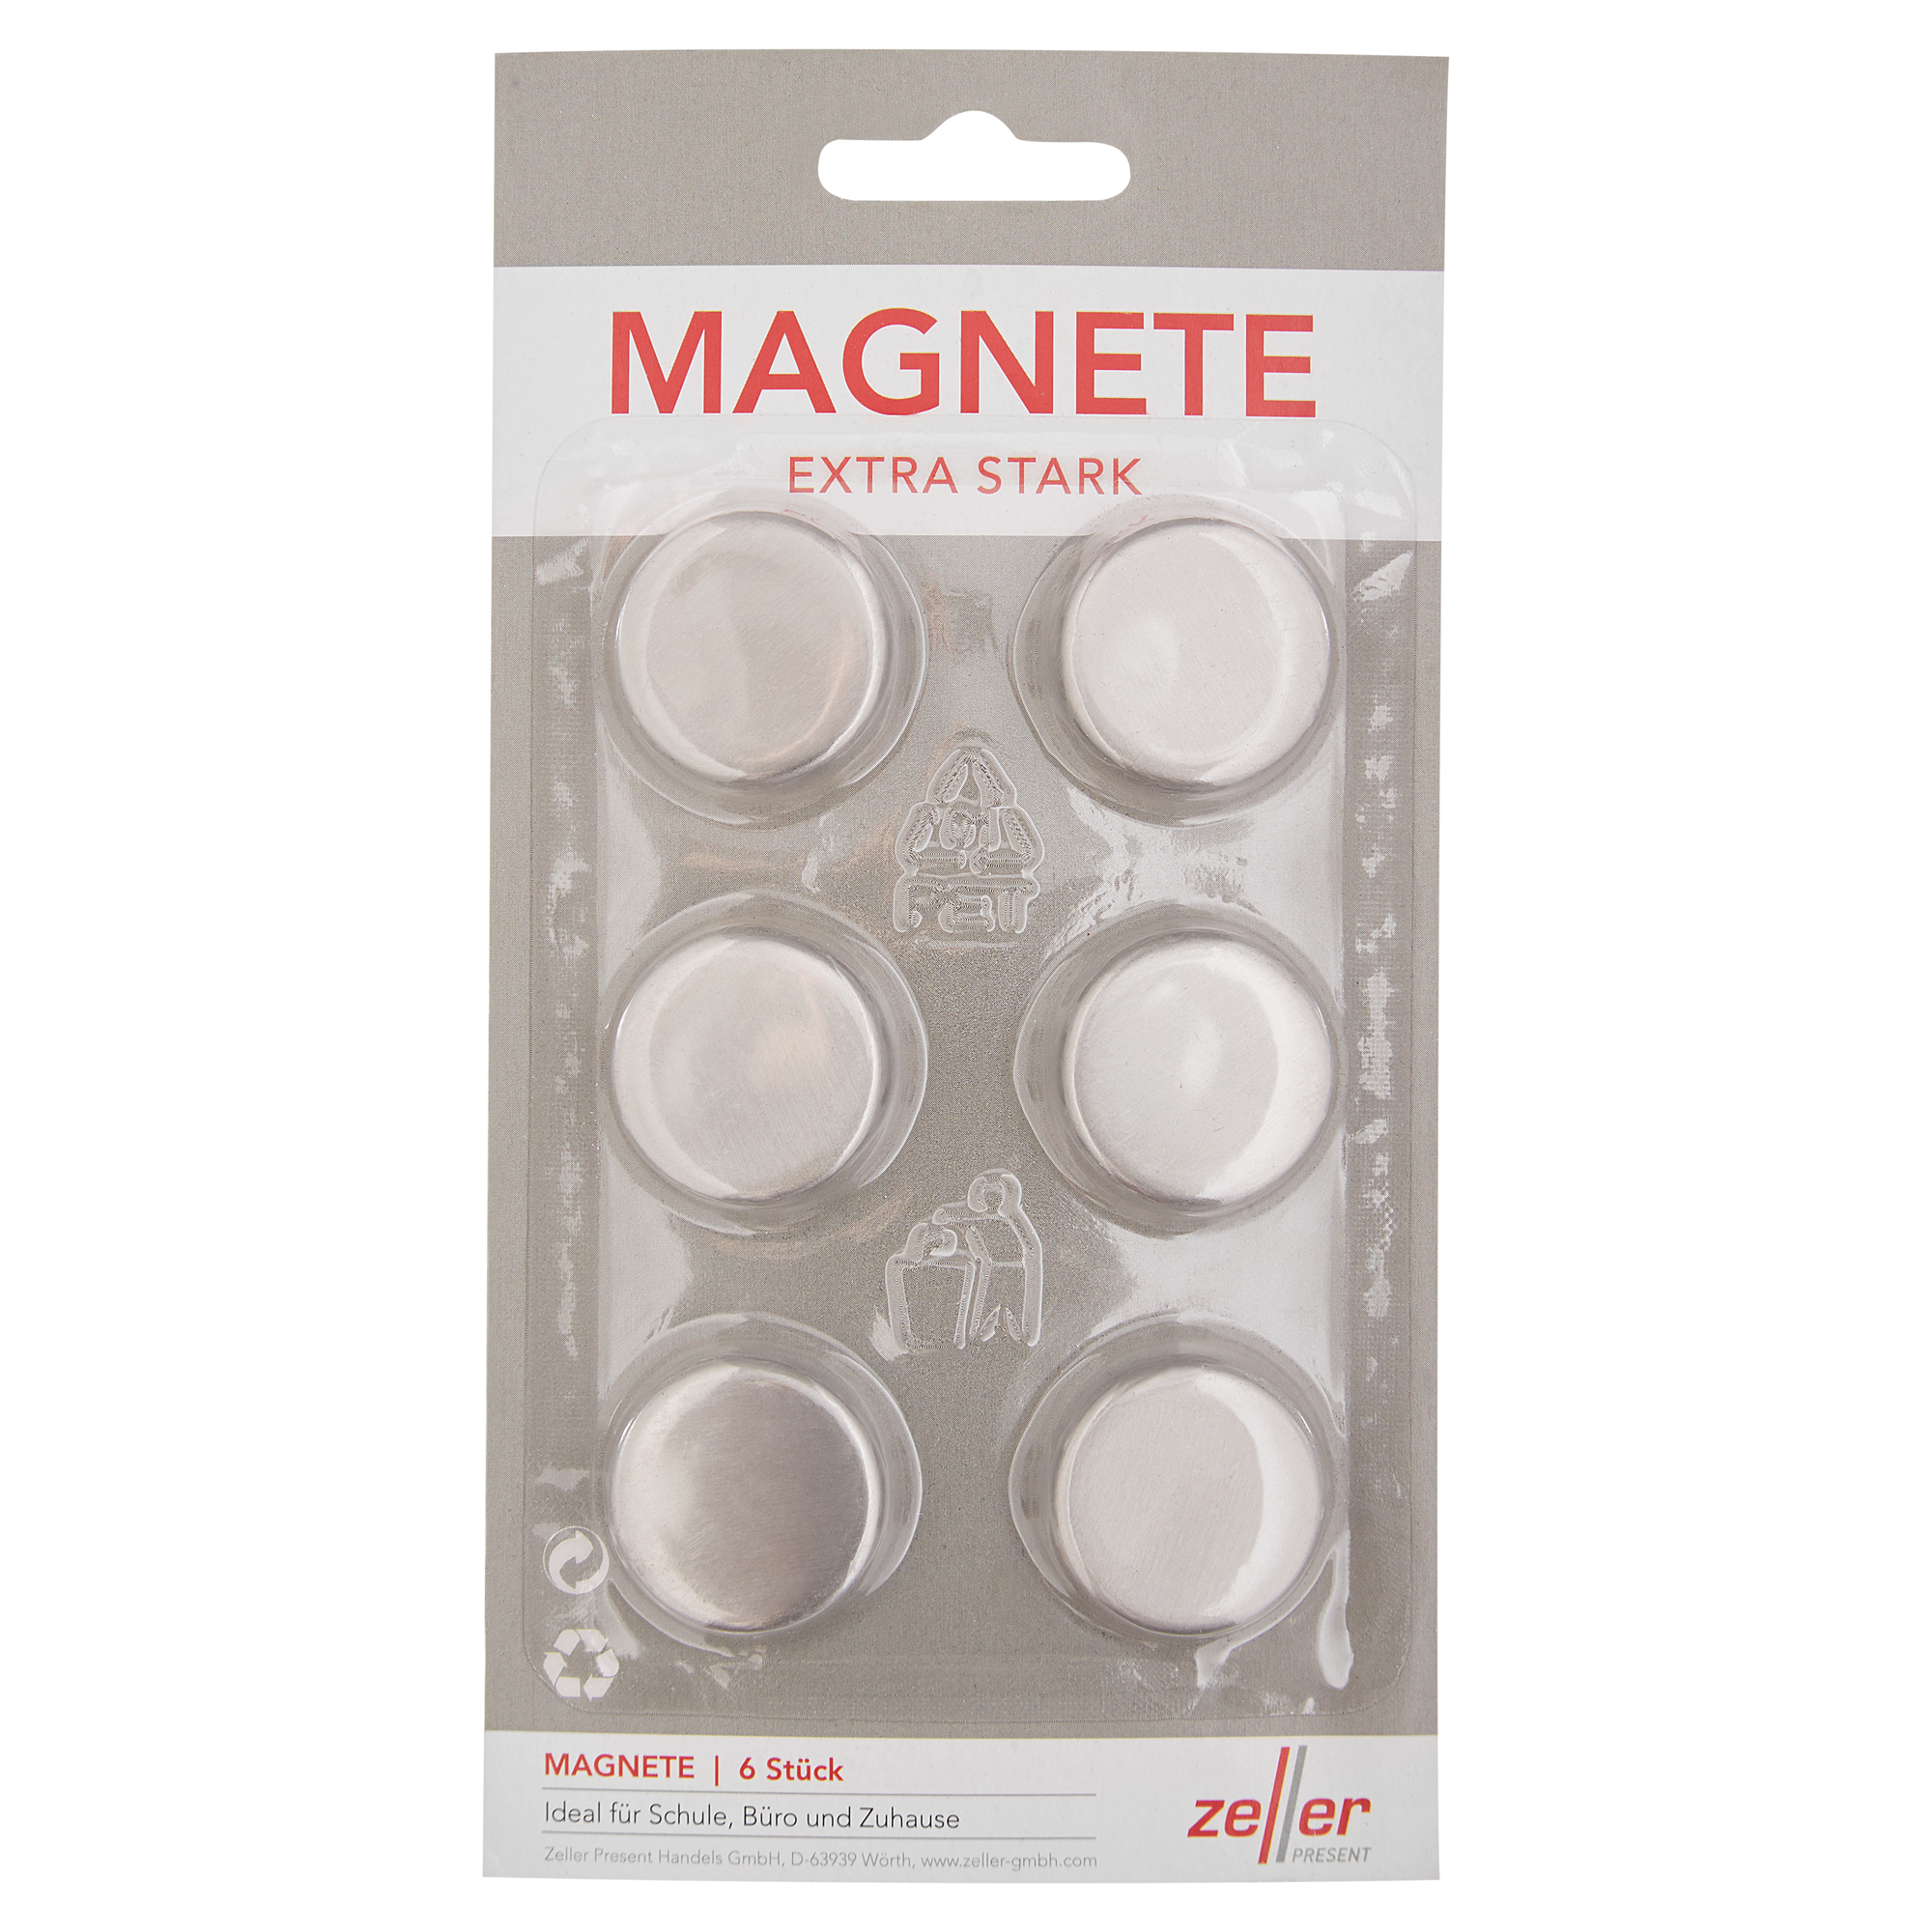 Magnetset Edelstahl 6 Stück + product picture